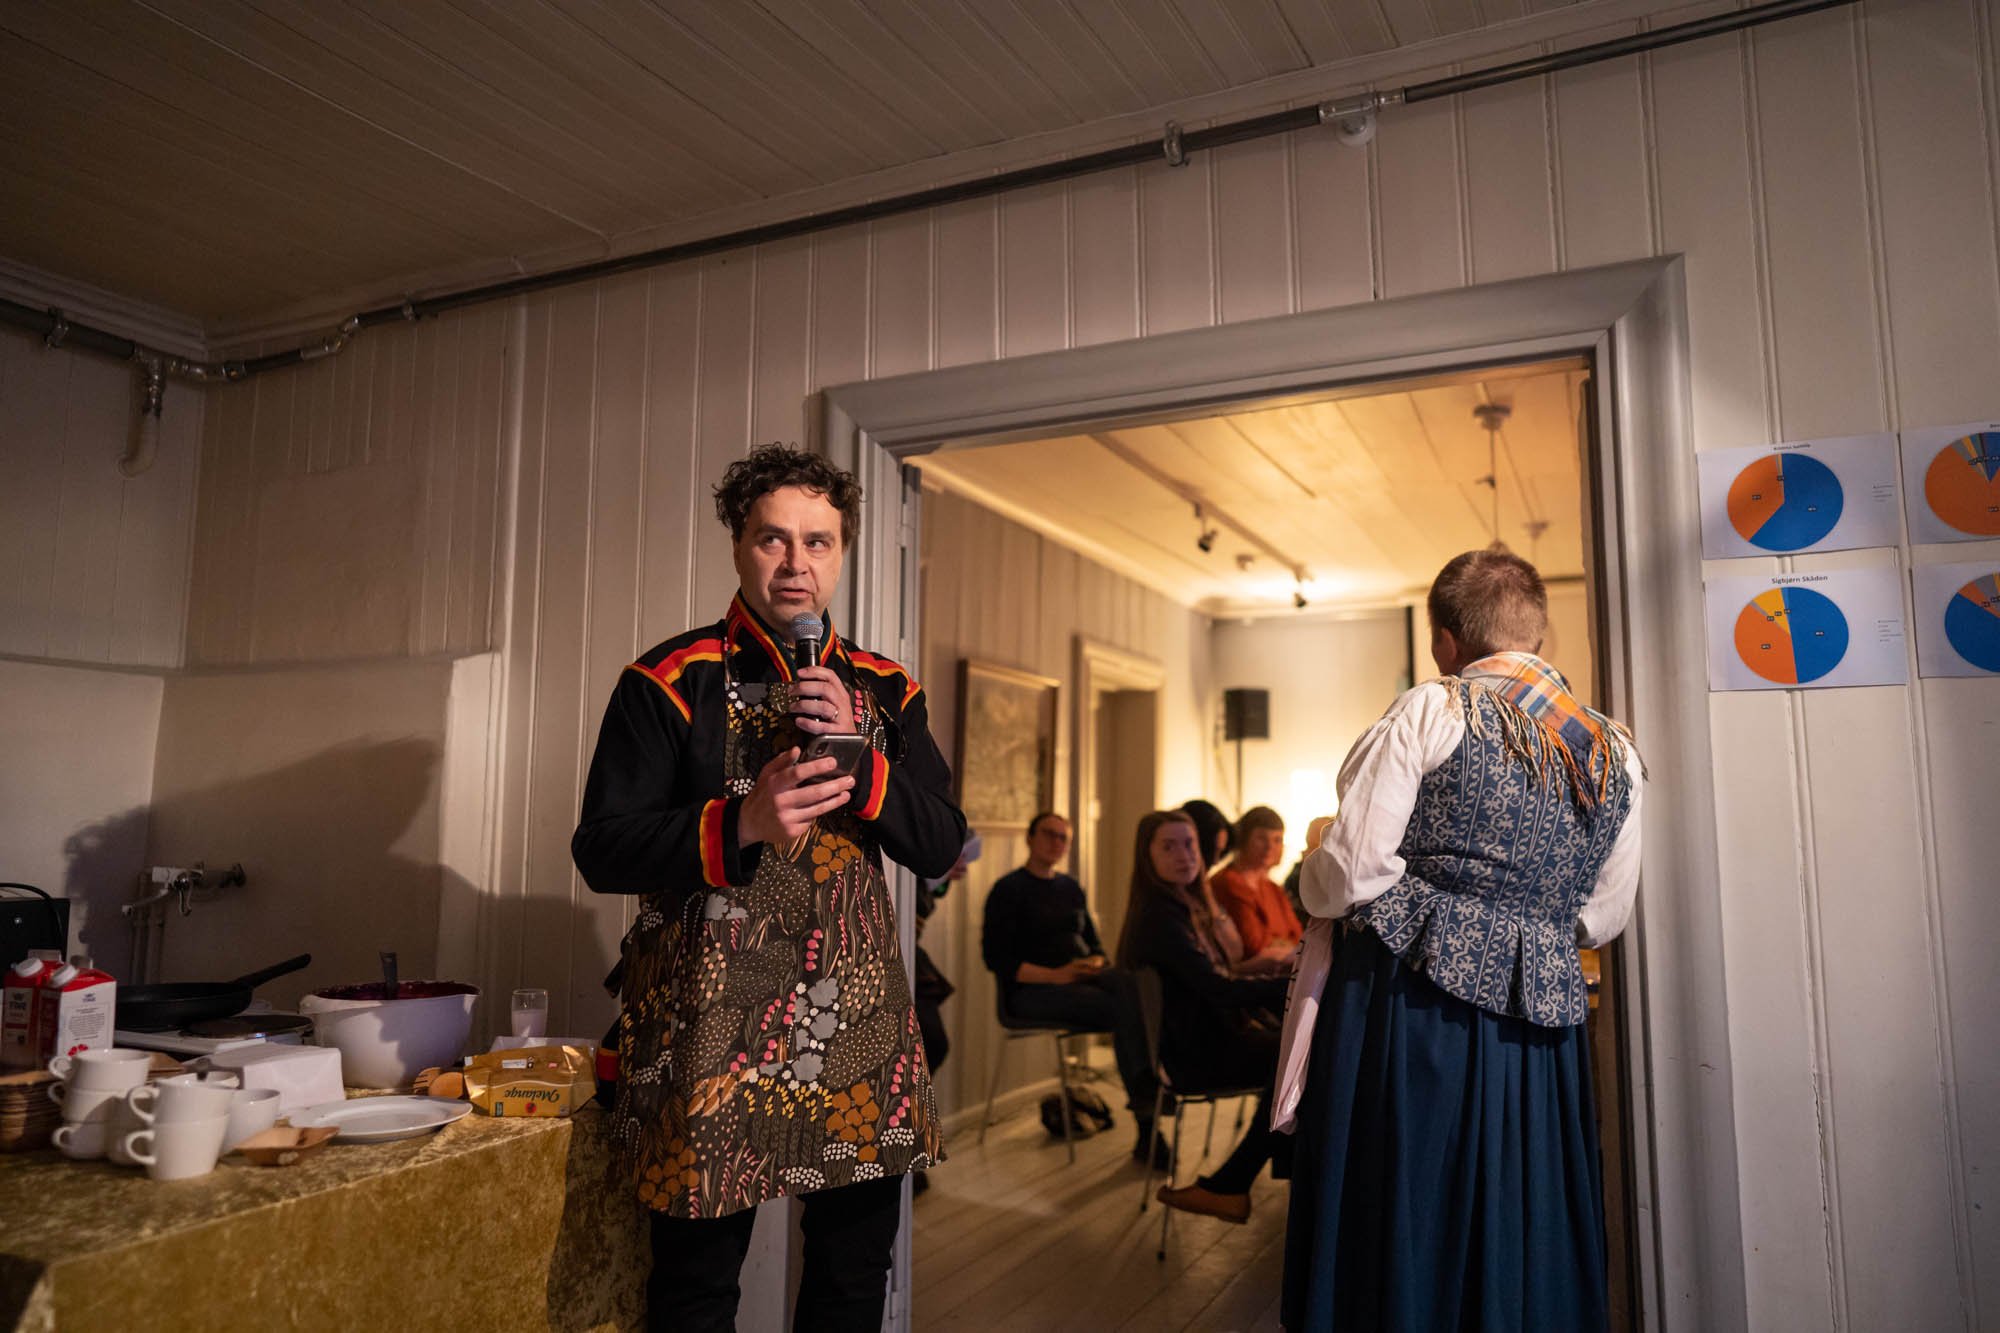  Forfatter Sigbjørn Skåden serverer blodpannekake, melk og historier. Foto: Sebastian Wilches/Vårscenefest 